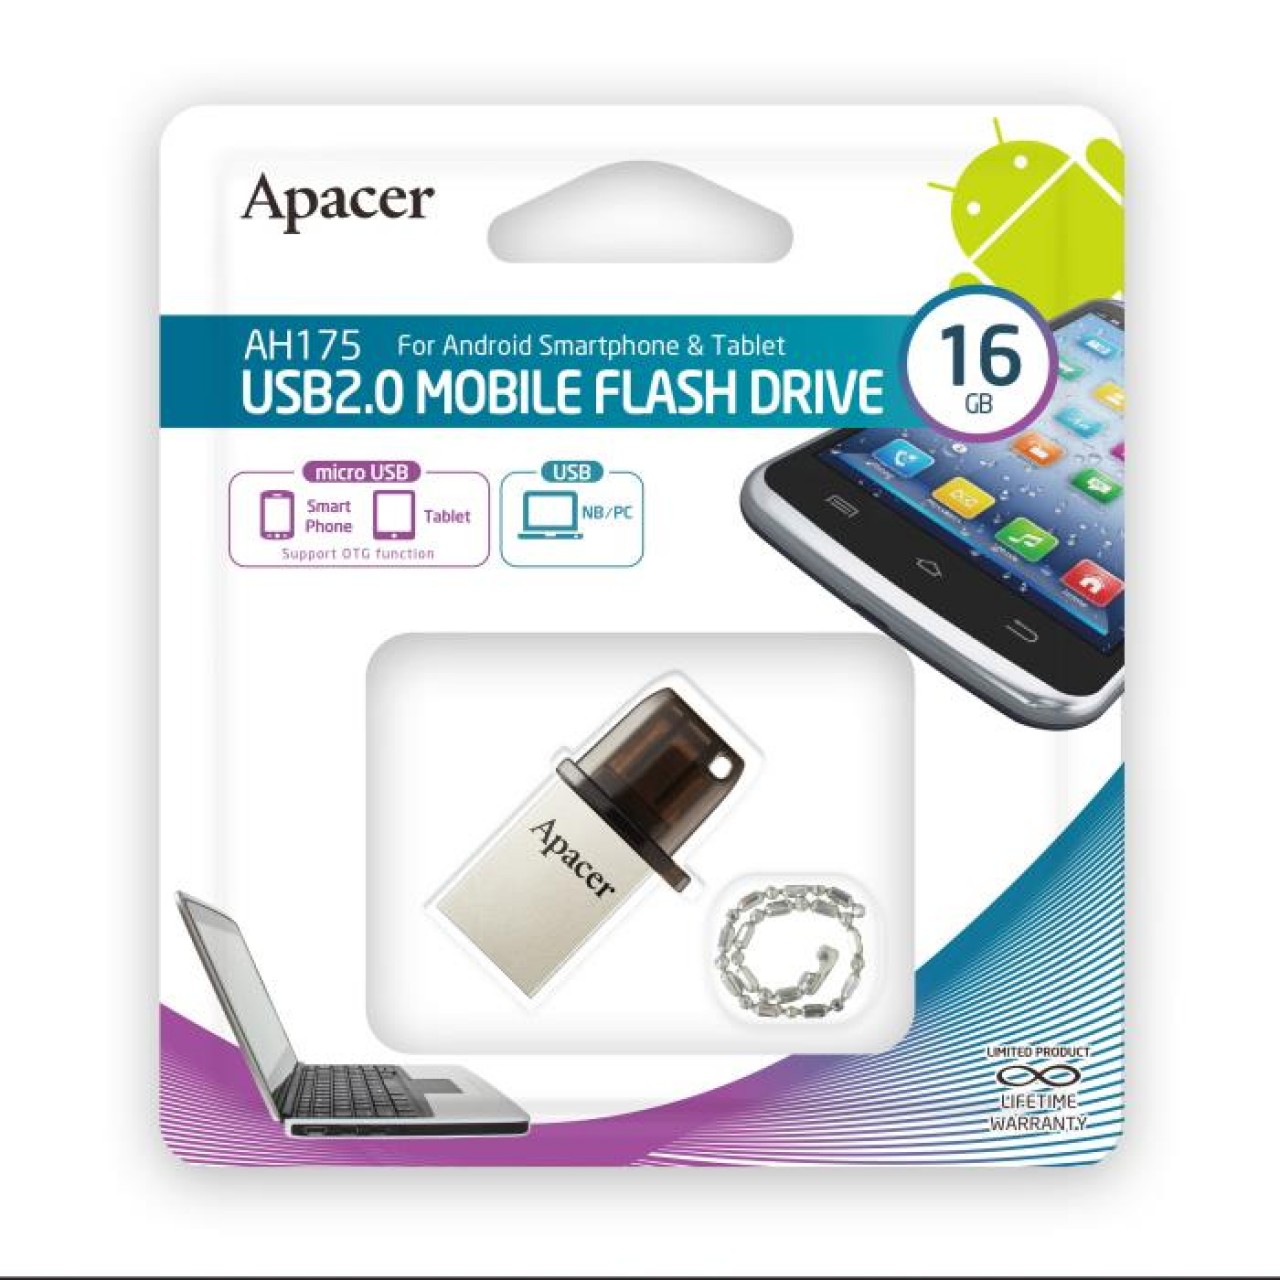 Usb 2.0/Micro Flash Drive 16GB Apacer AH175